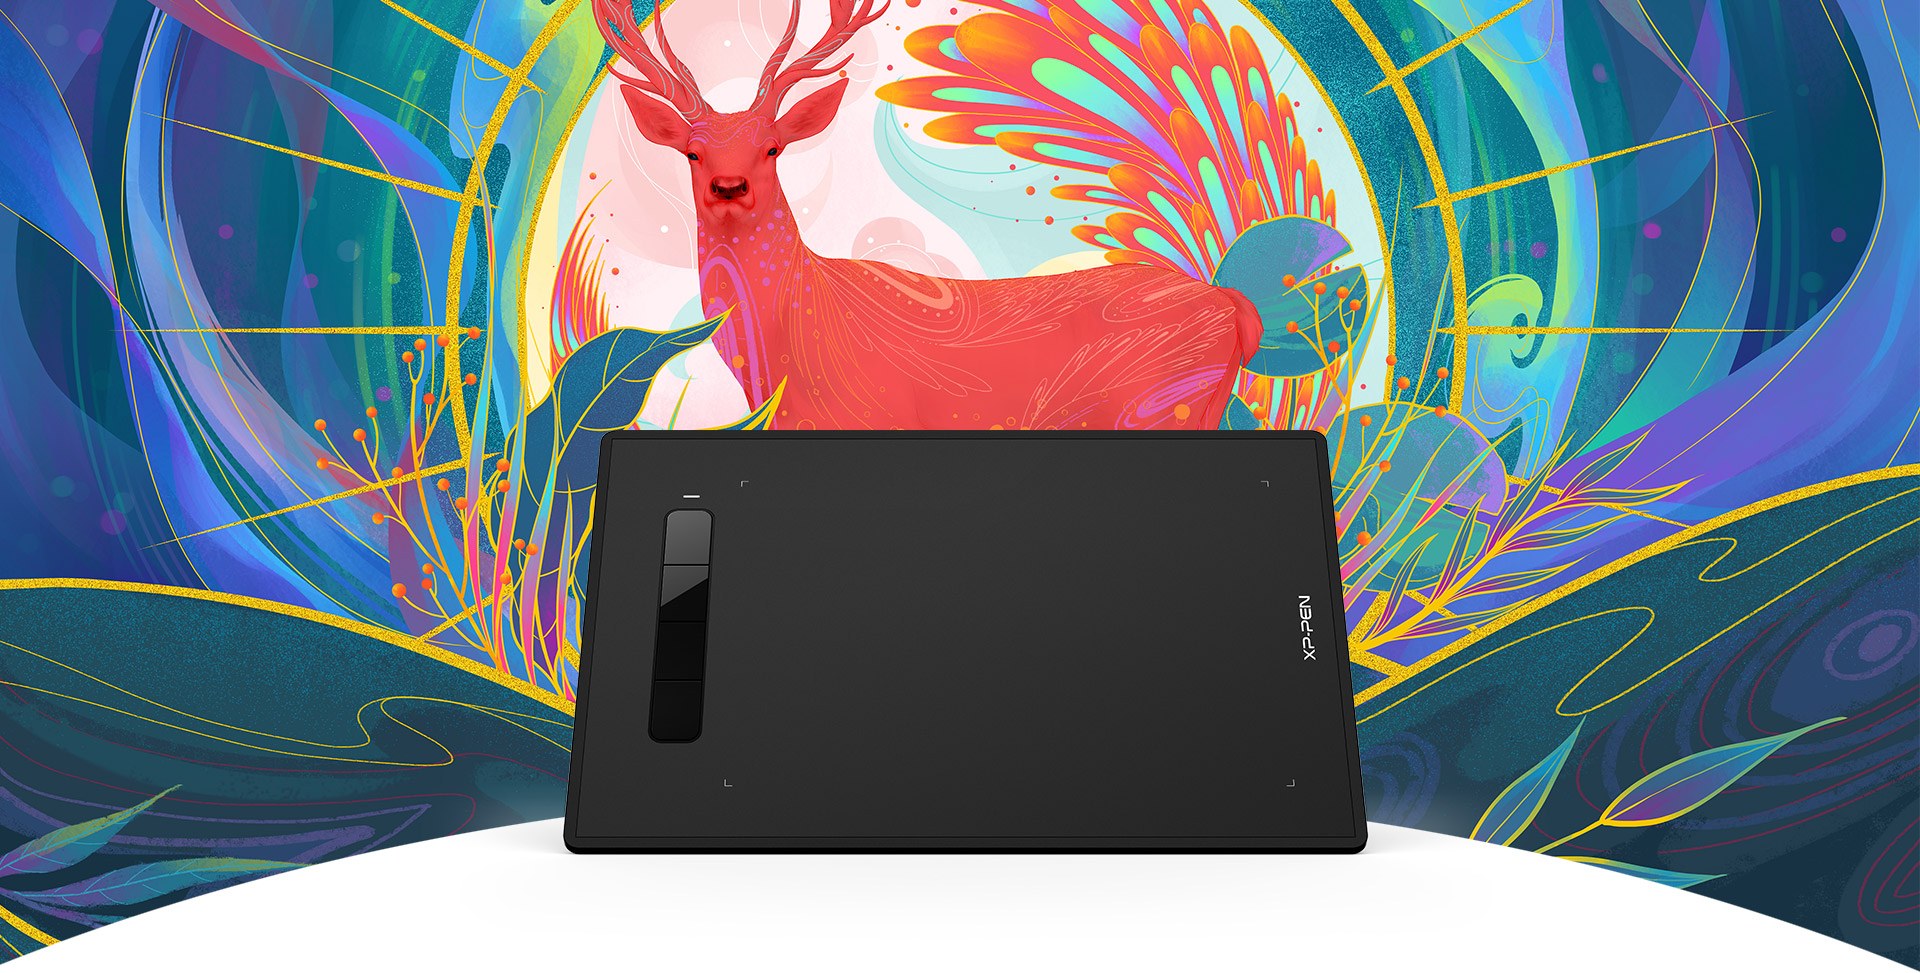 XP-Pen Star G960S Plus Digital Graphic Drawing Tablet Pen Tablet Pad 8192 Levels 